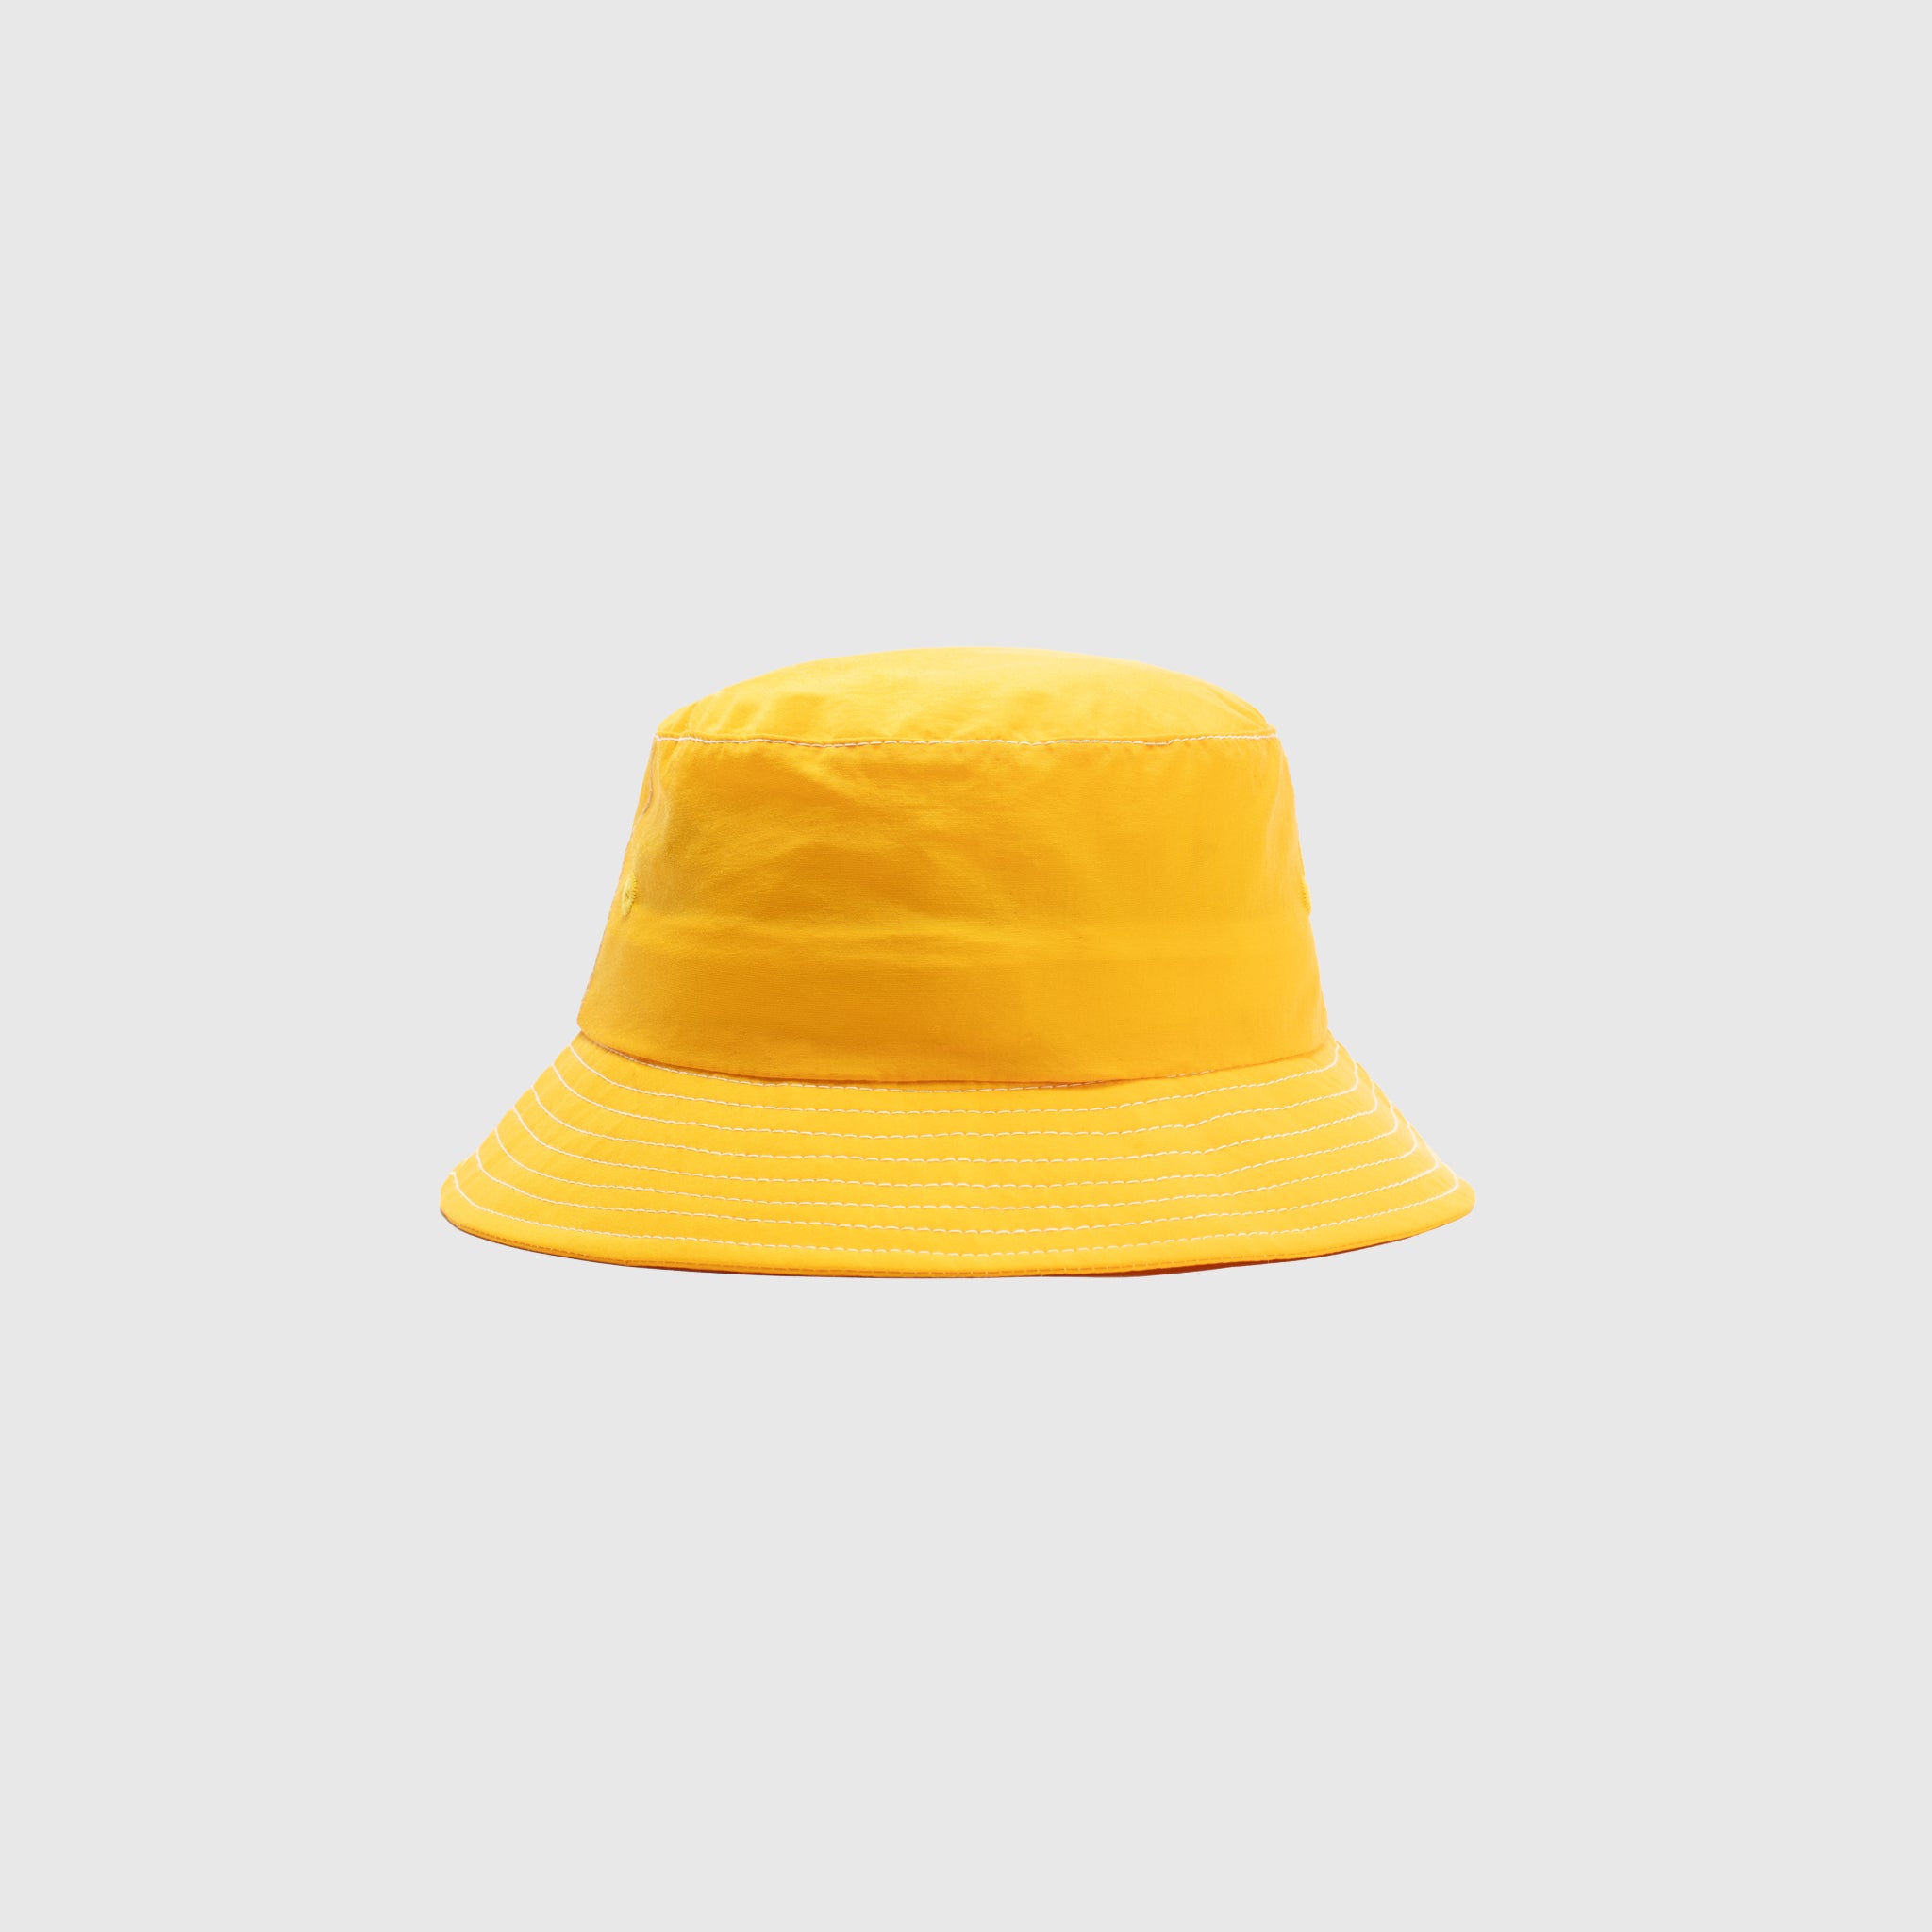 NYLON TAFETTA BUCKET Parade hat